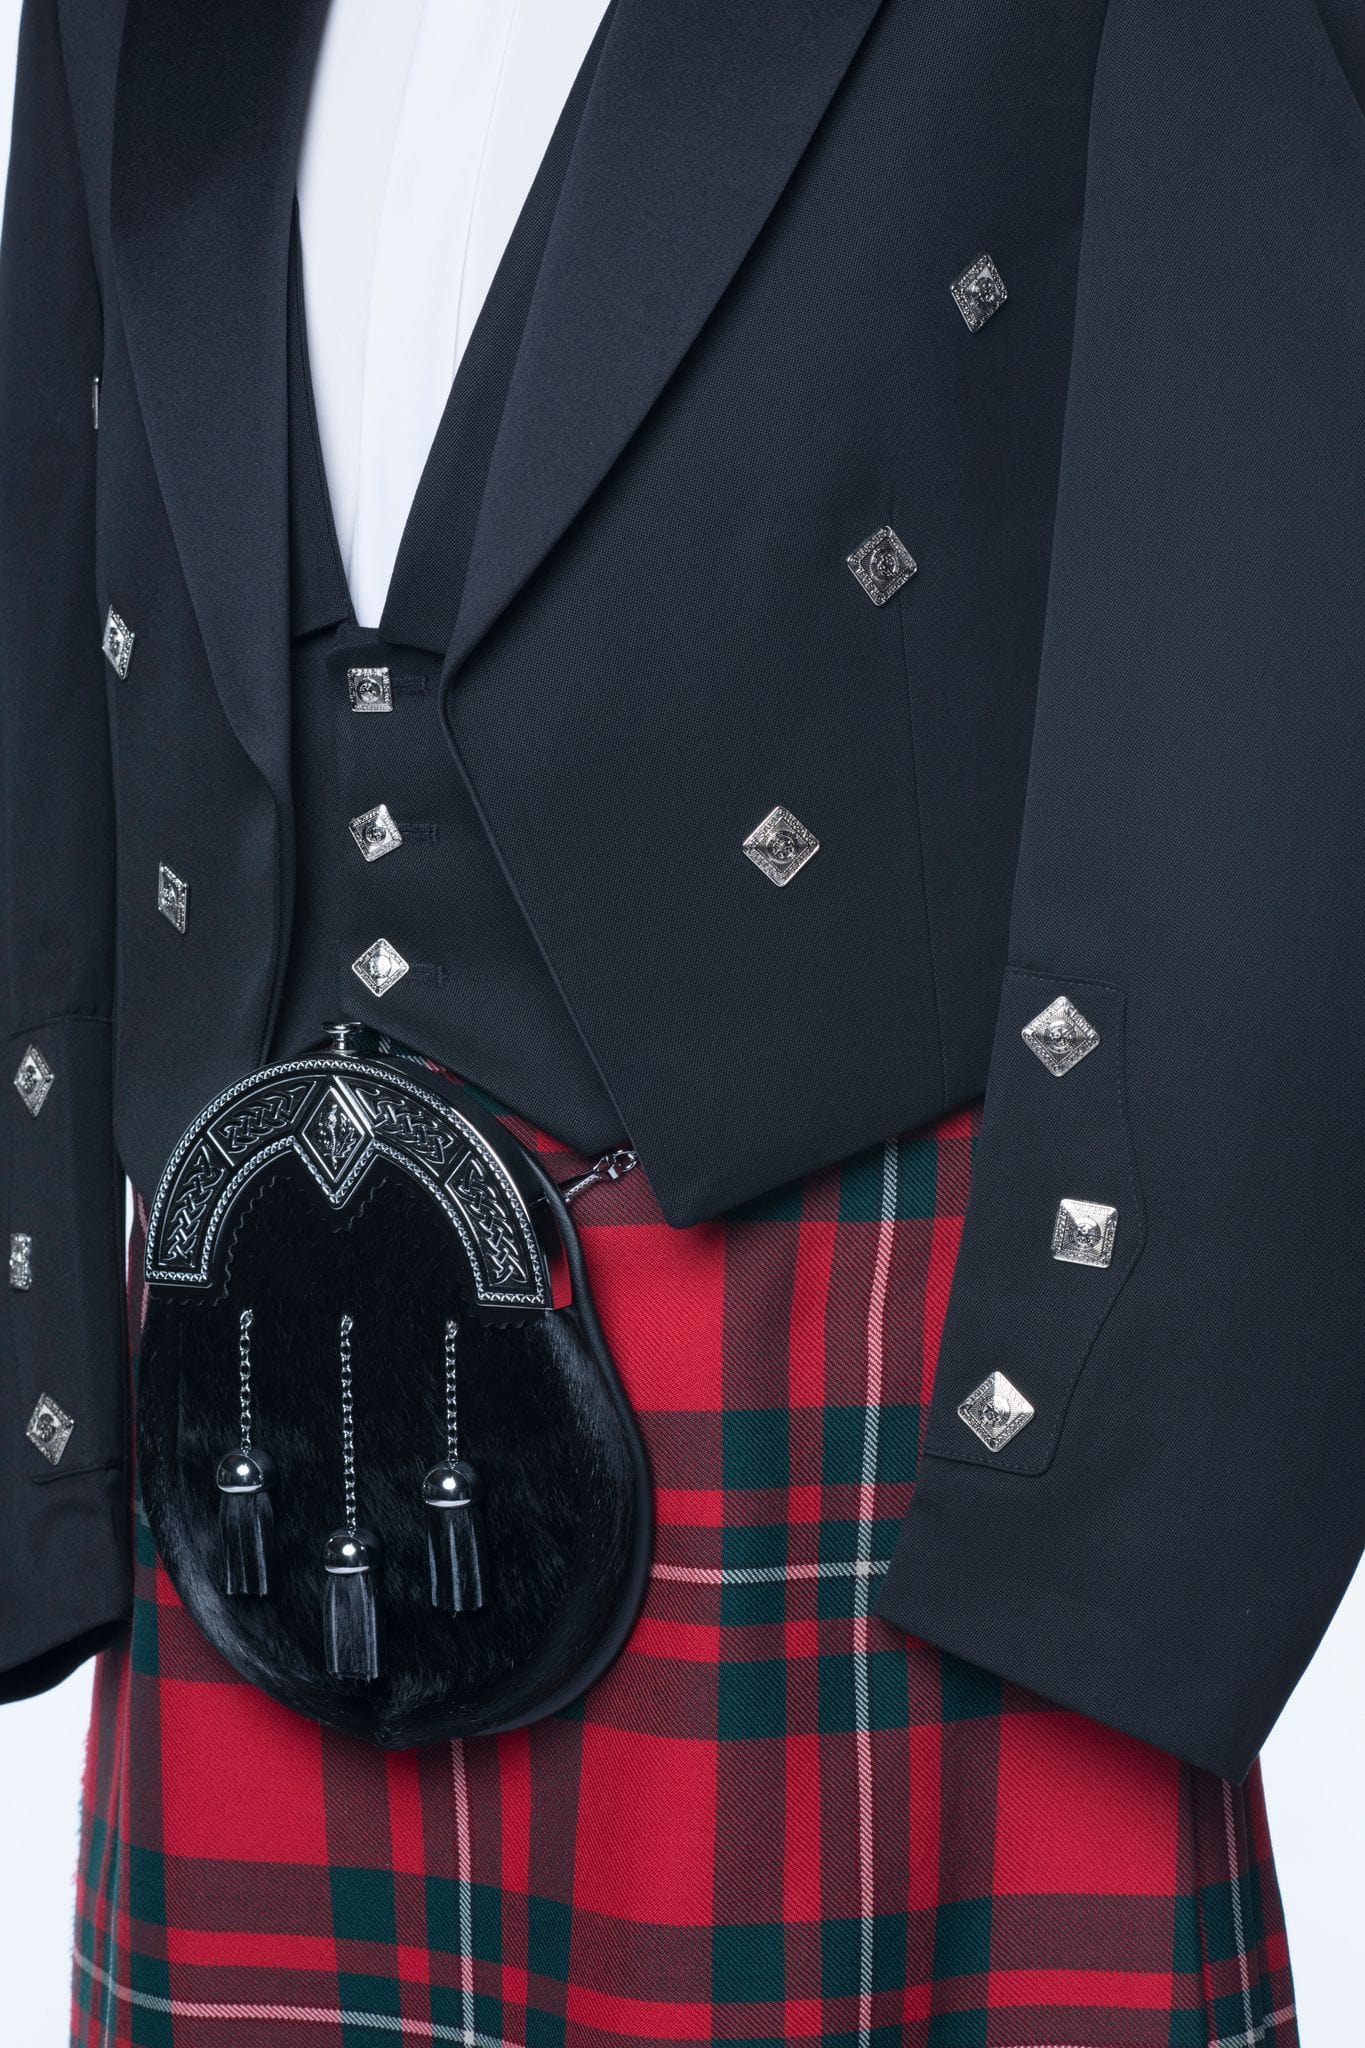 Starter Prince Charlie Kilt Outfit - MacGregor and MacDuff